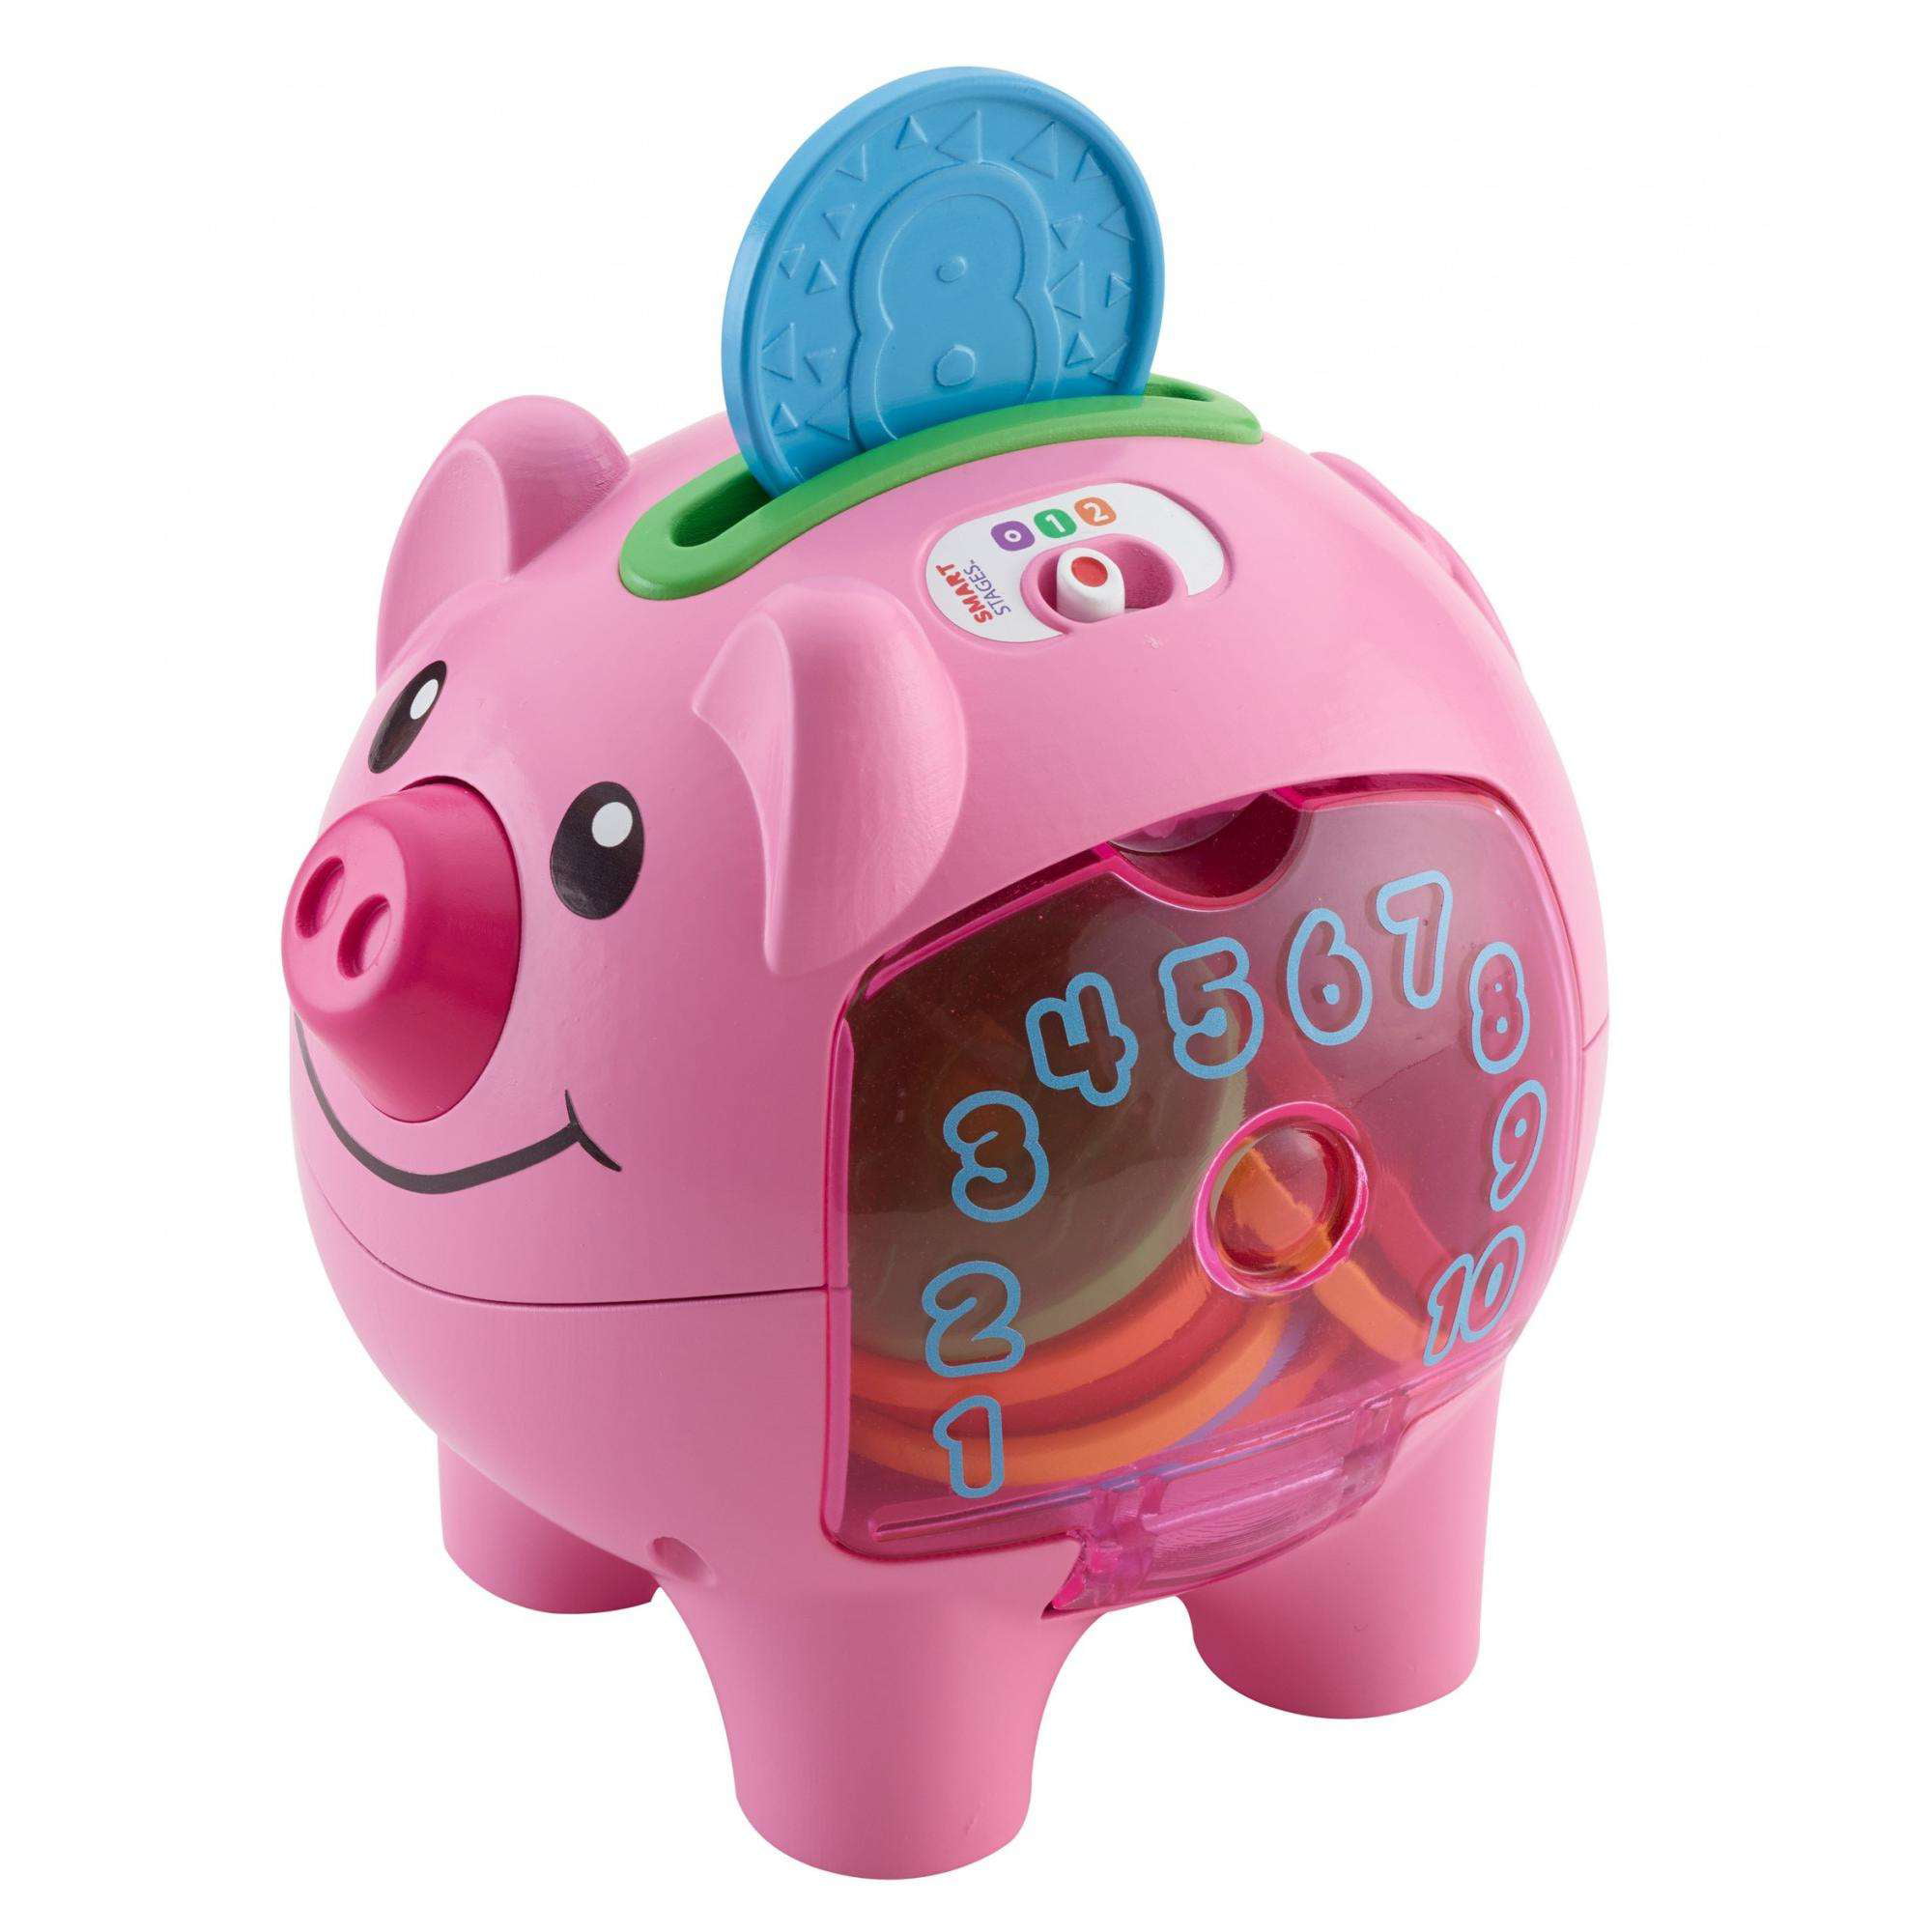 piggy bank toy